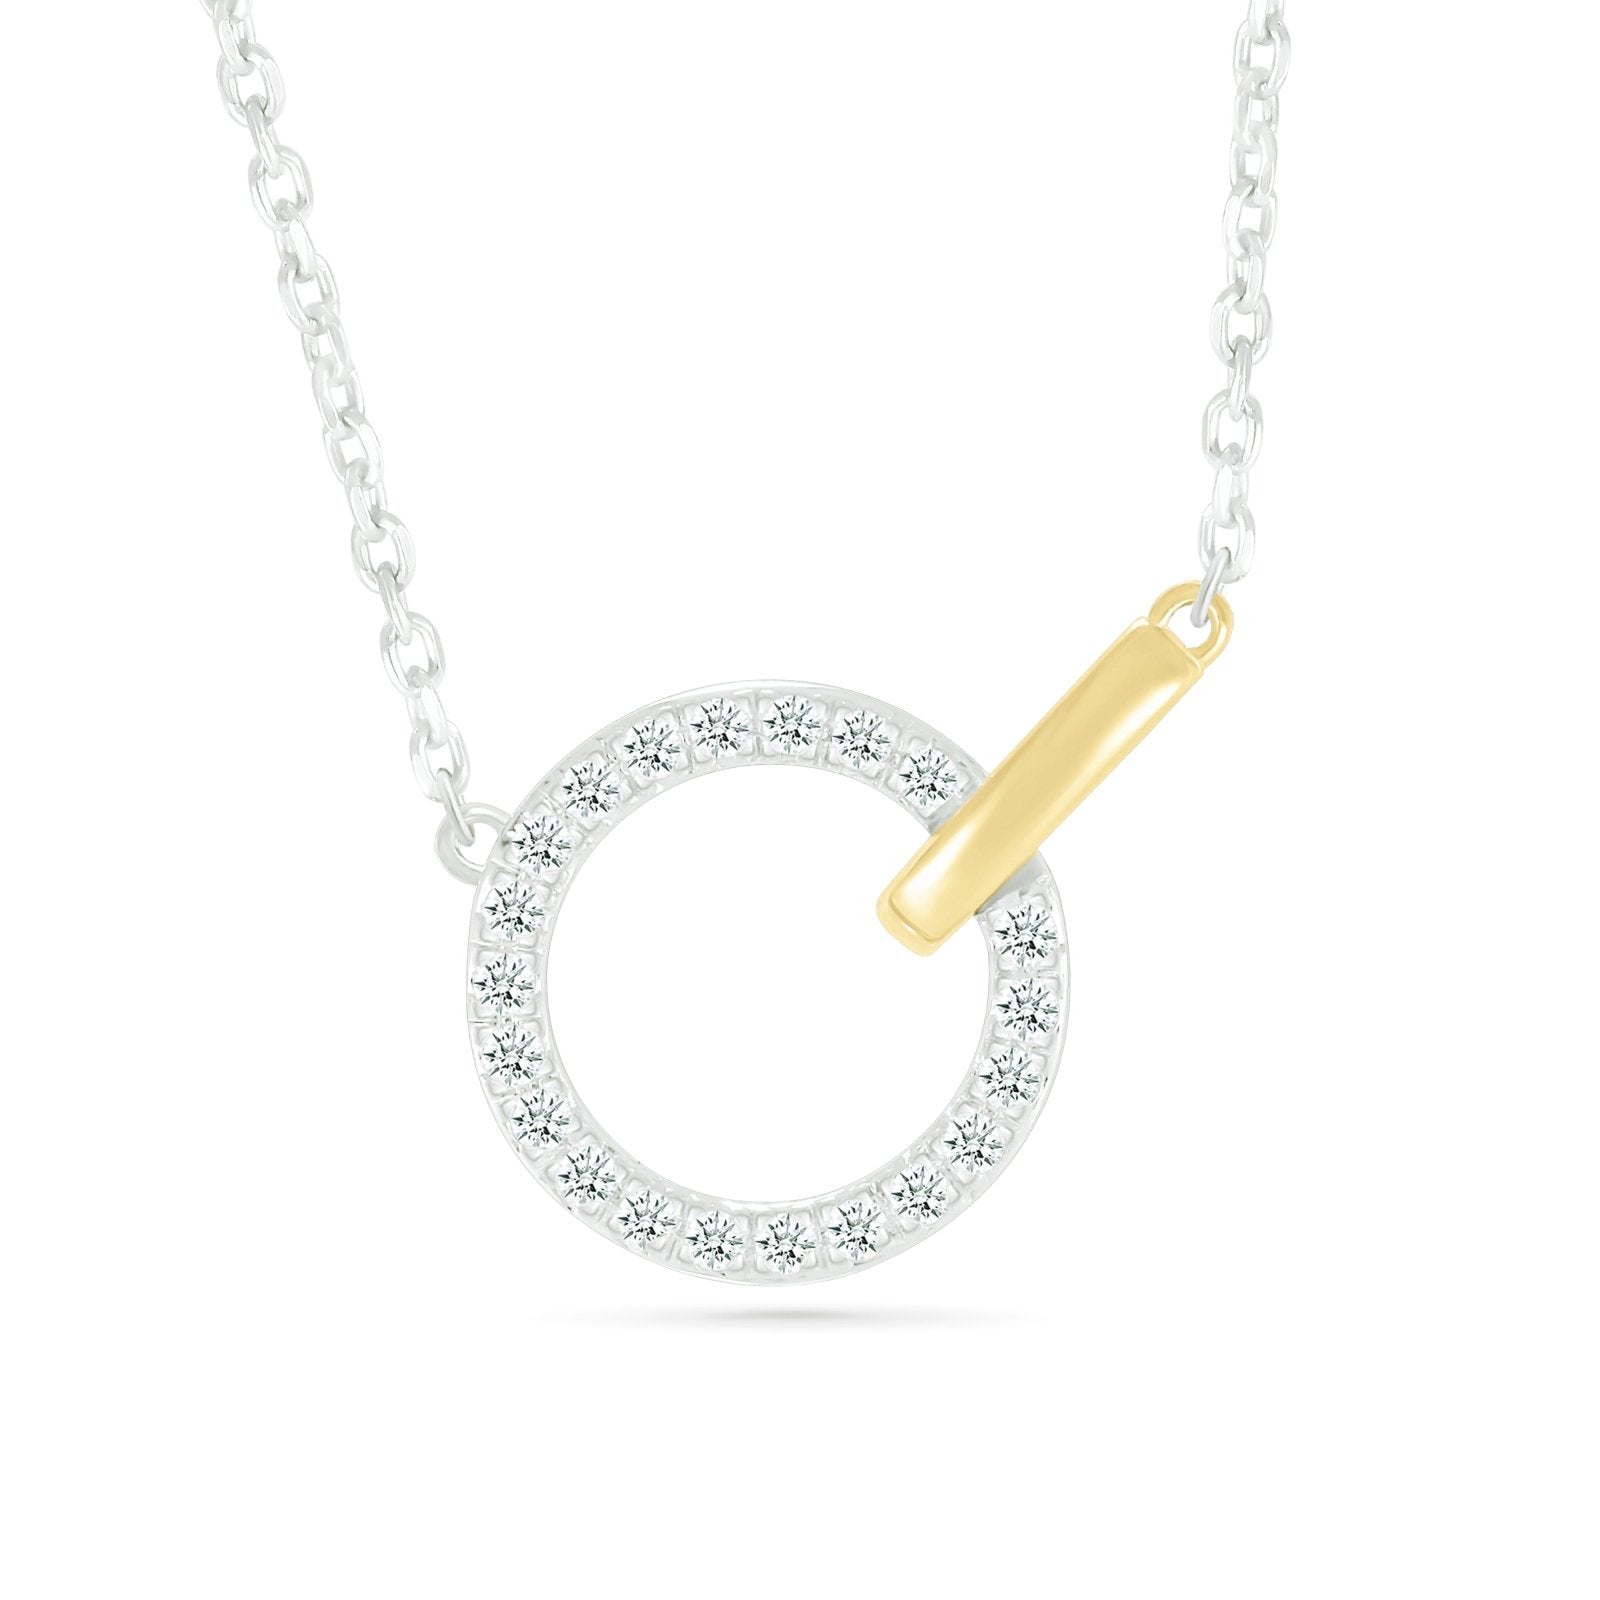 Interlocking Diamond and Gold Circle Necklace Necklaces Estella Collection #product_description# 32687 925 Diamond Made to Order #tag4# #tag5# #tag6# #tag7# #tag8# #tag9# #tag10#